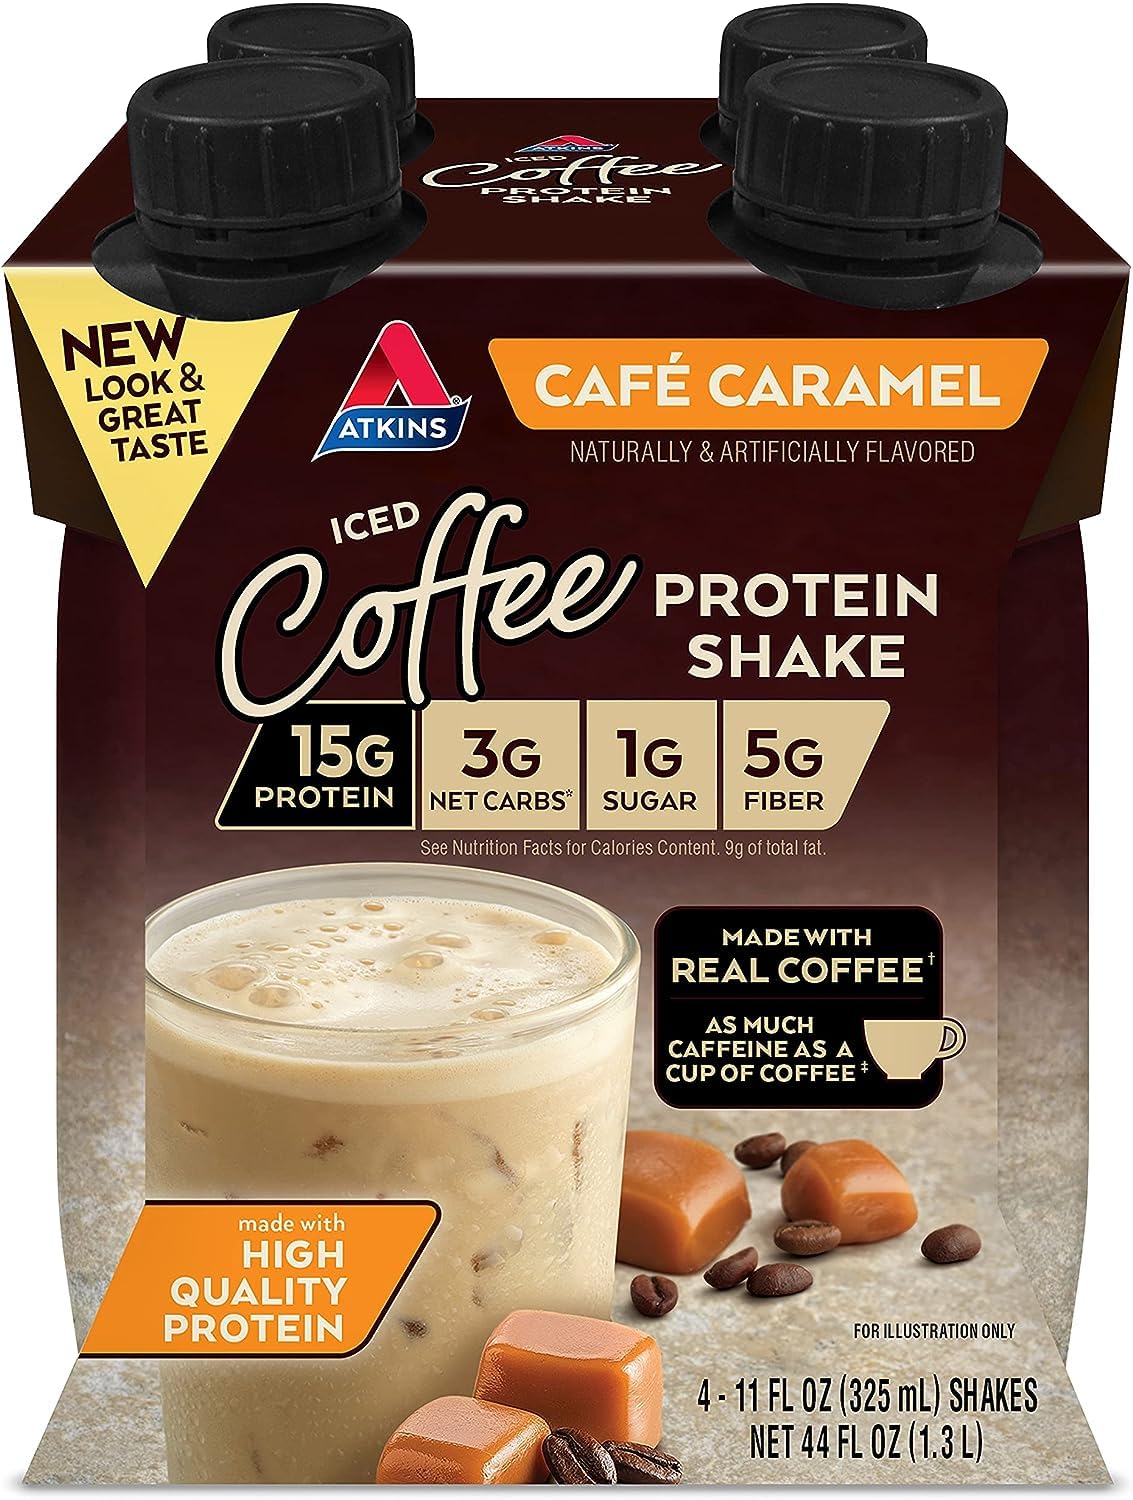 Atkins™ Café Caramel Iced Coffee Protein Shake, 15g Protein, Low Glycemic, 3g Net Carb, 1g Sugar, Keto Friendly